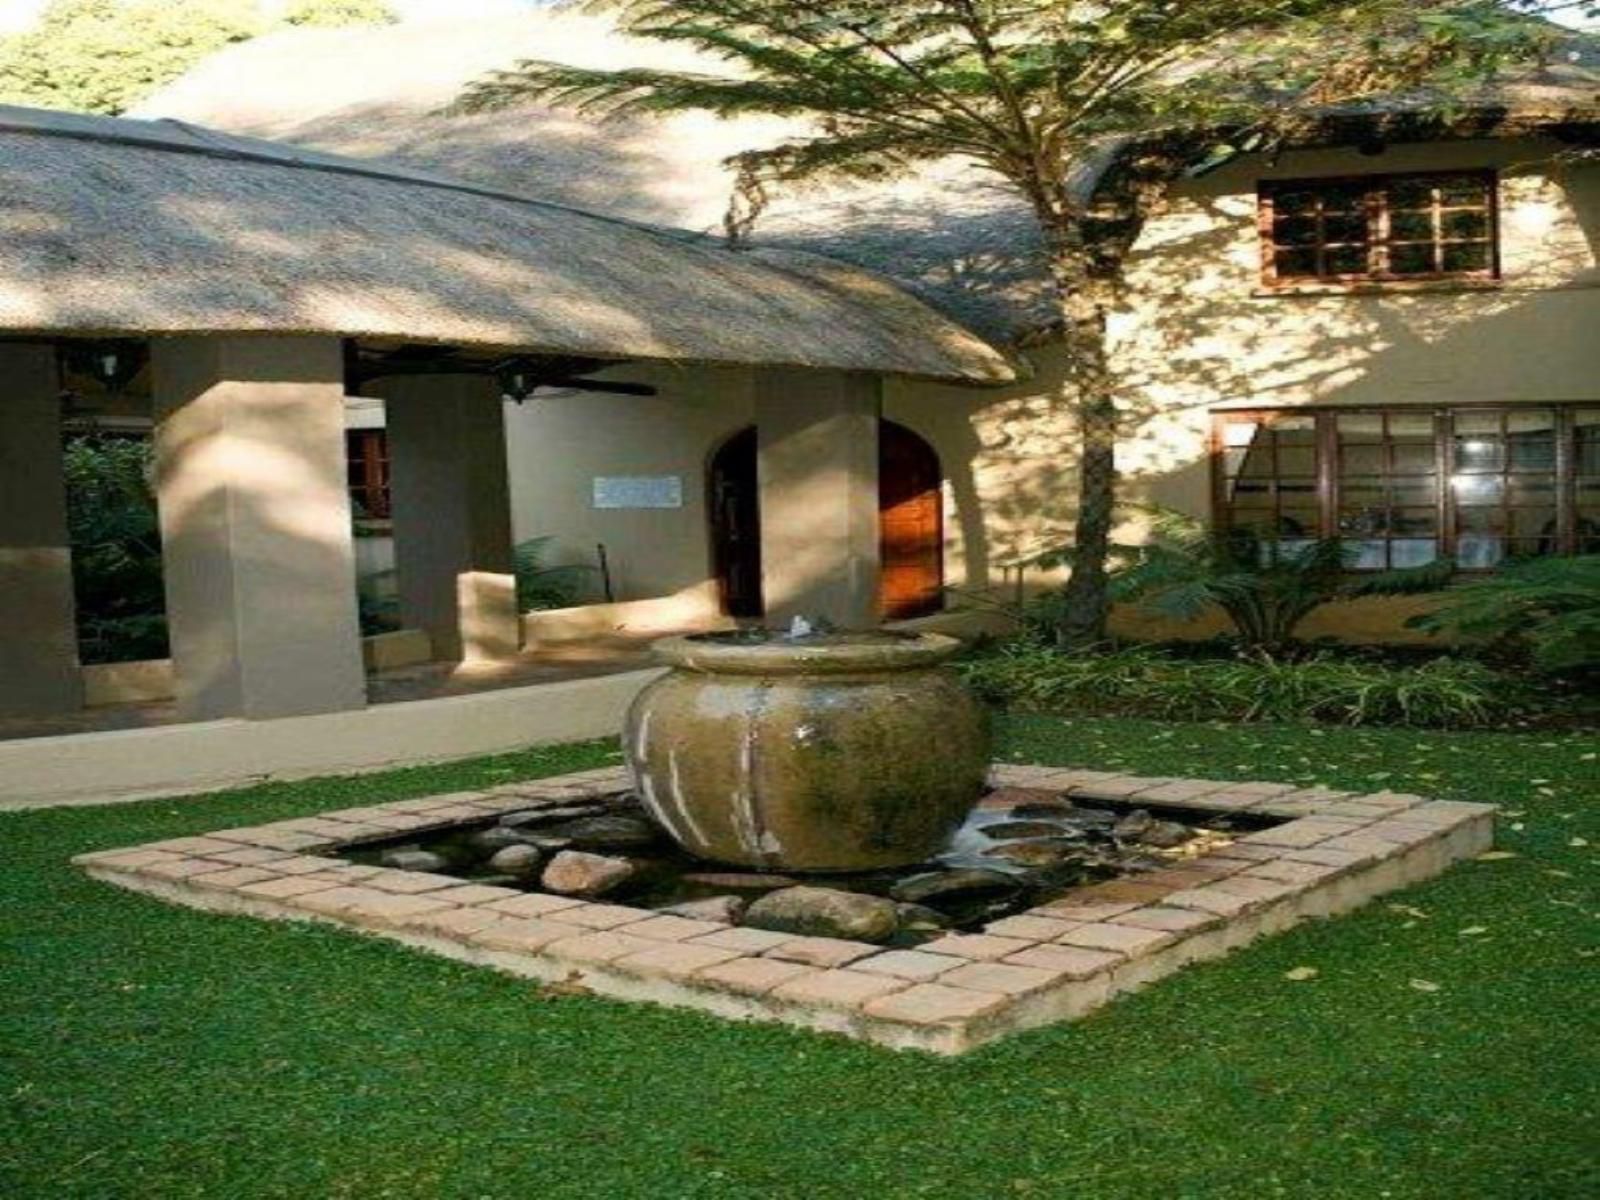 Monchique Guest House And Conference Centre Muldersdrift Gauteng South Africa House, Building, Architecture, Garden, Nature, Plant